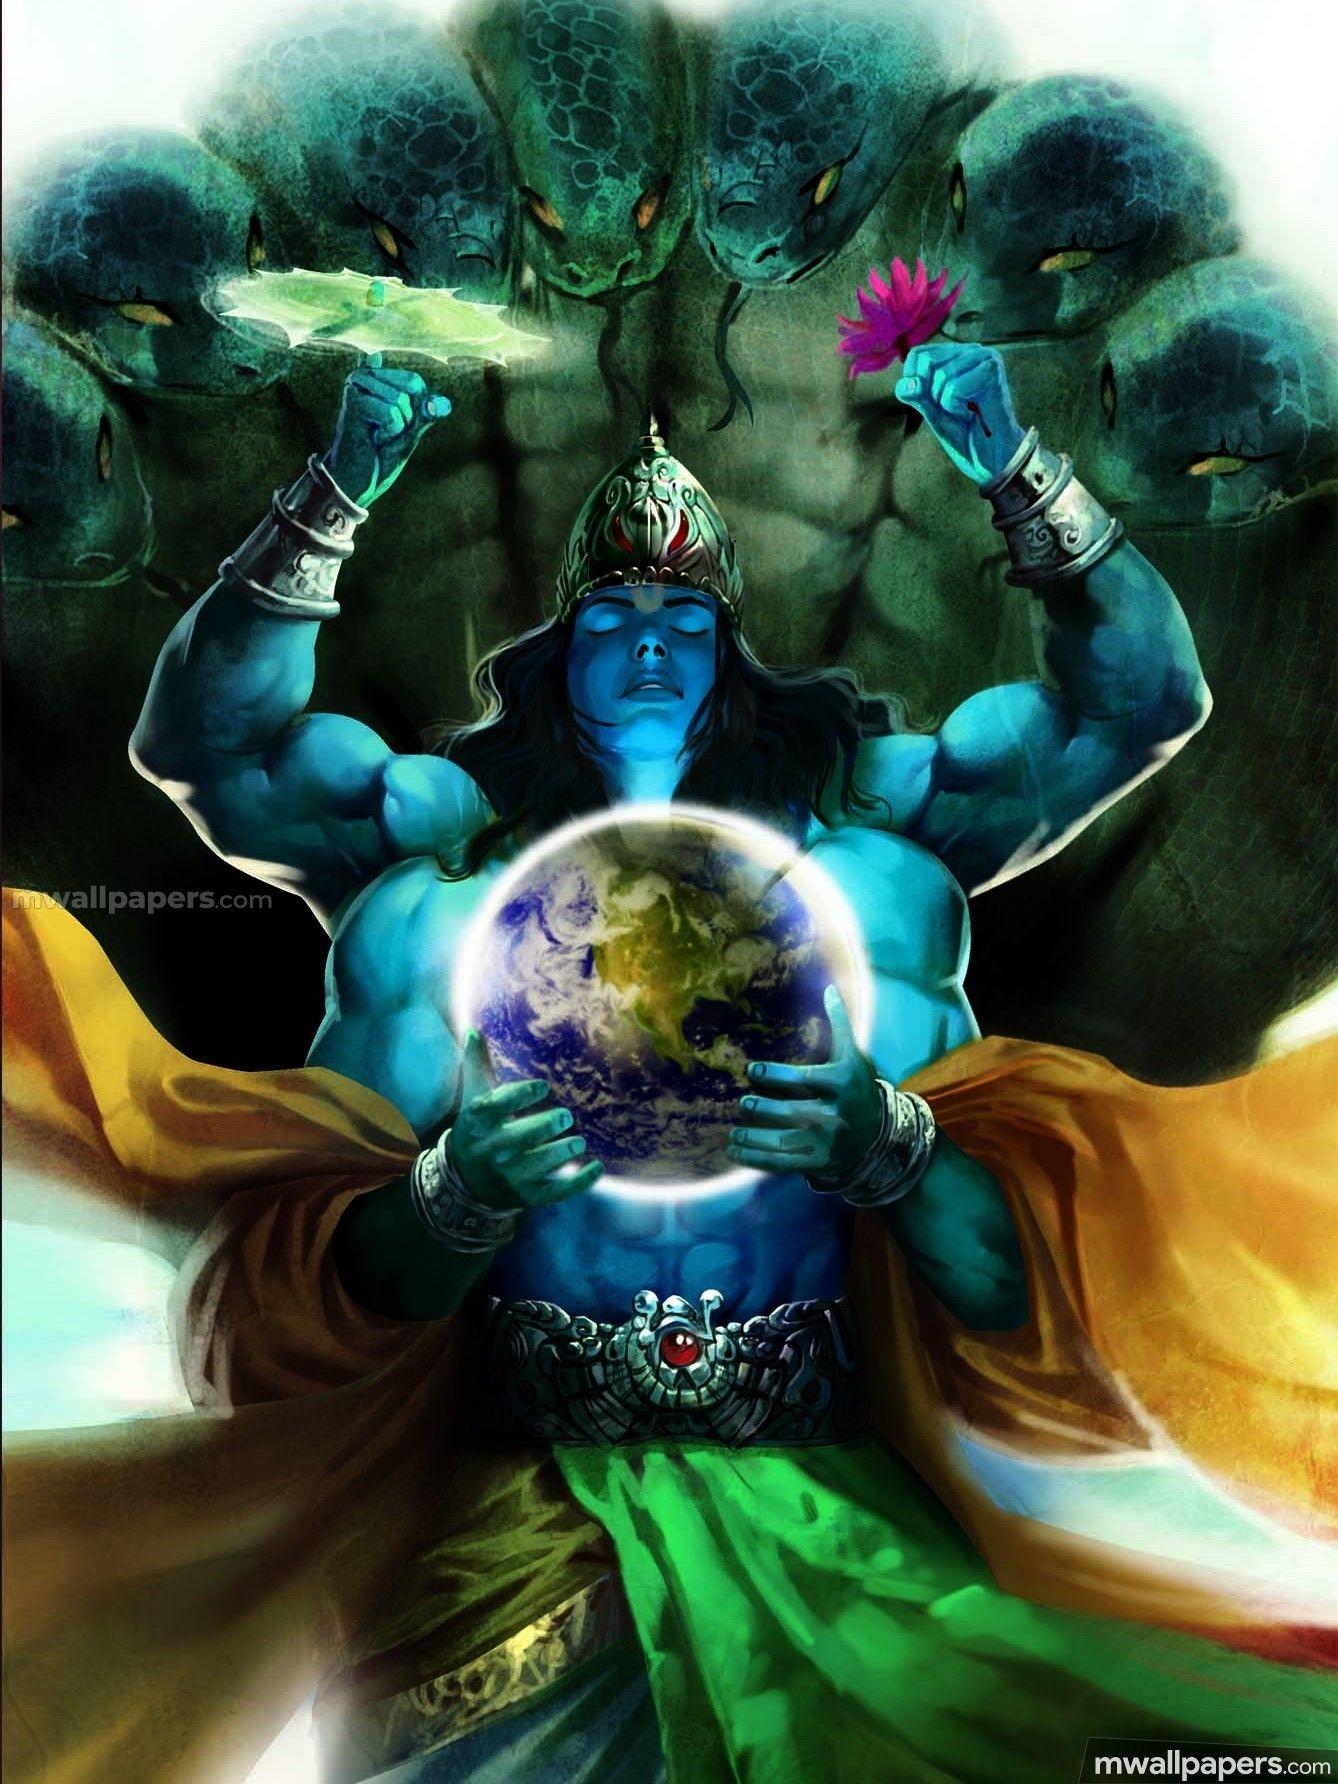 Download Lord Vishnu HD Image (1080p) in 1080p HD quality to use